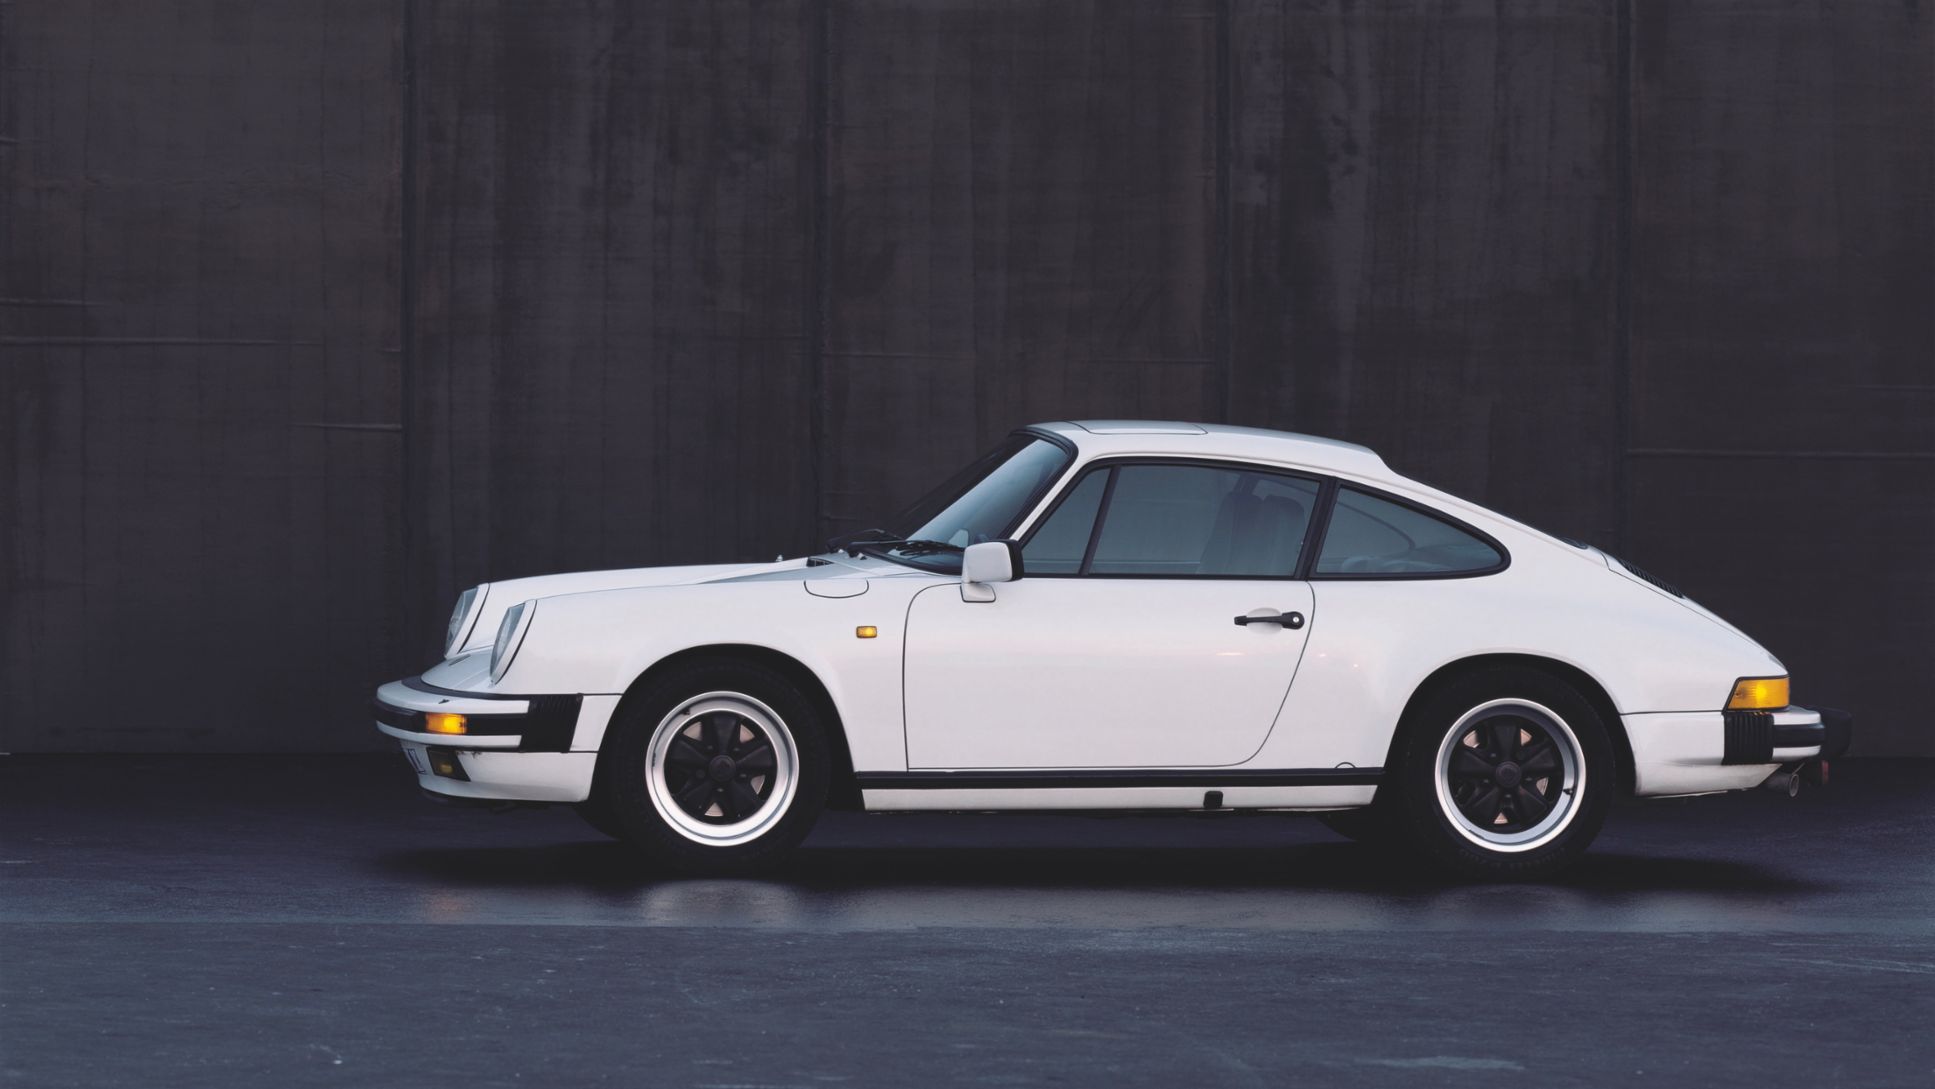 Serie G: un 911 que simboliza la pureza - Porsche Newsroom LAT-AM